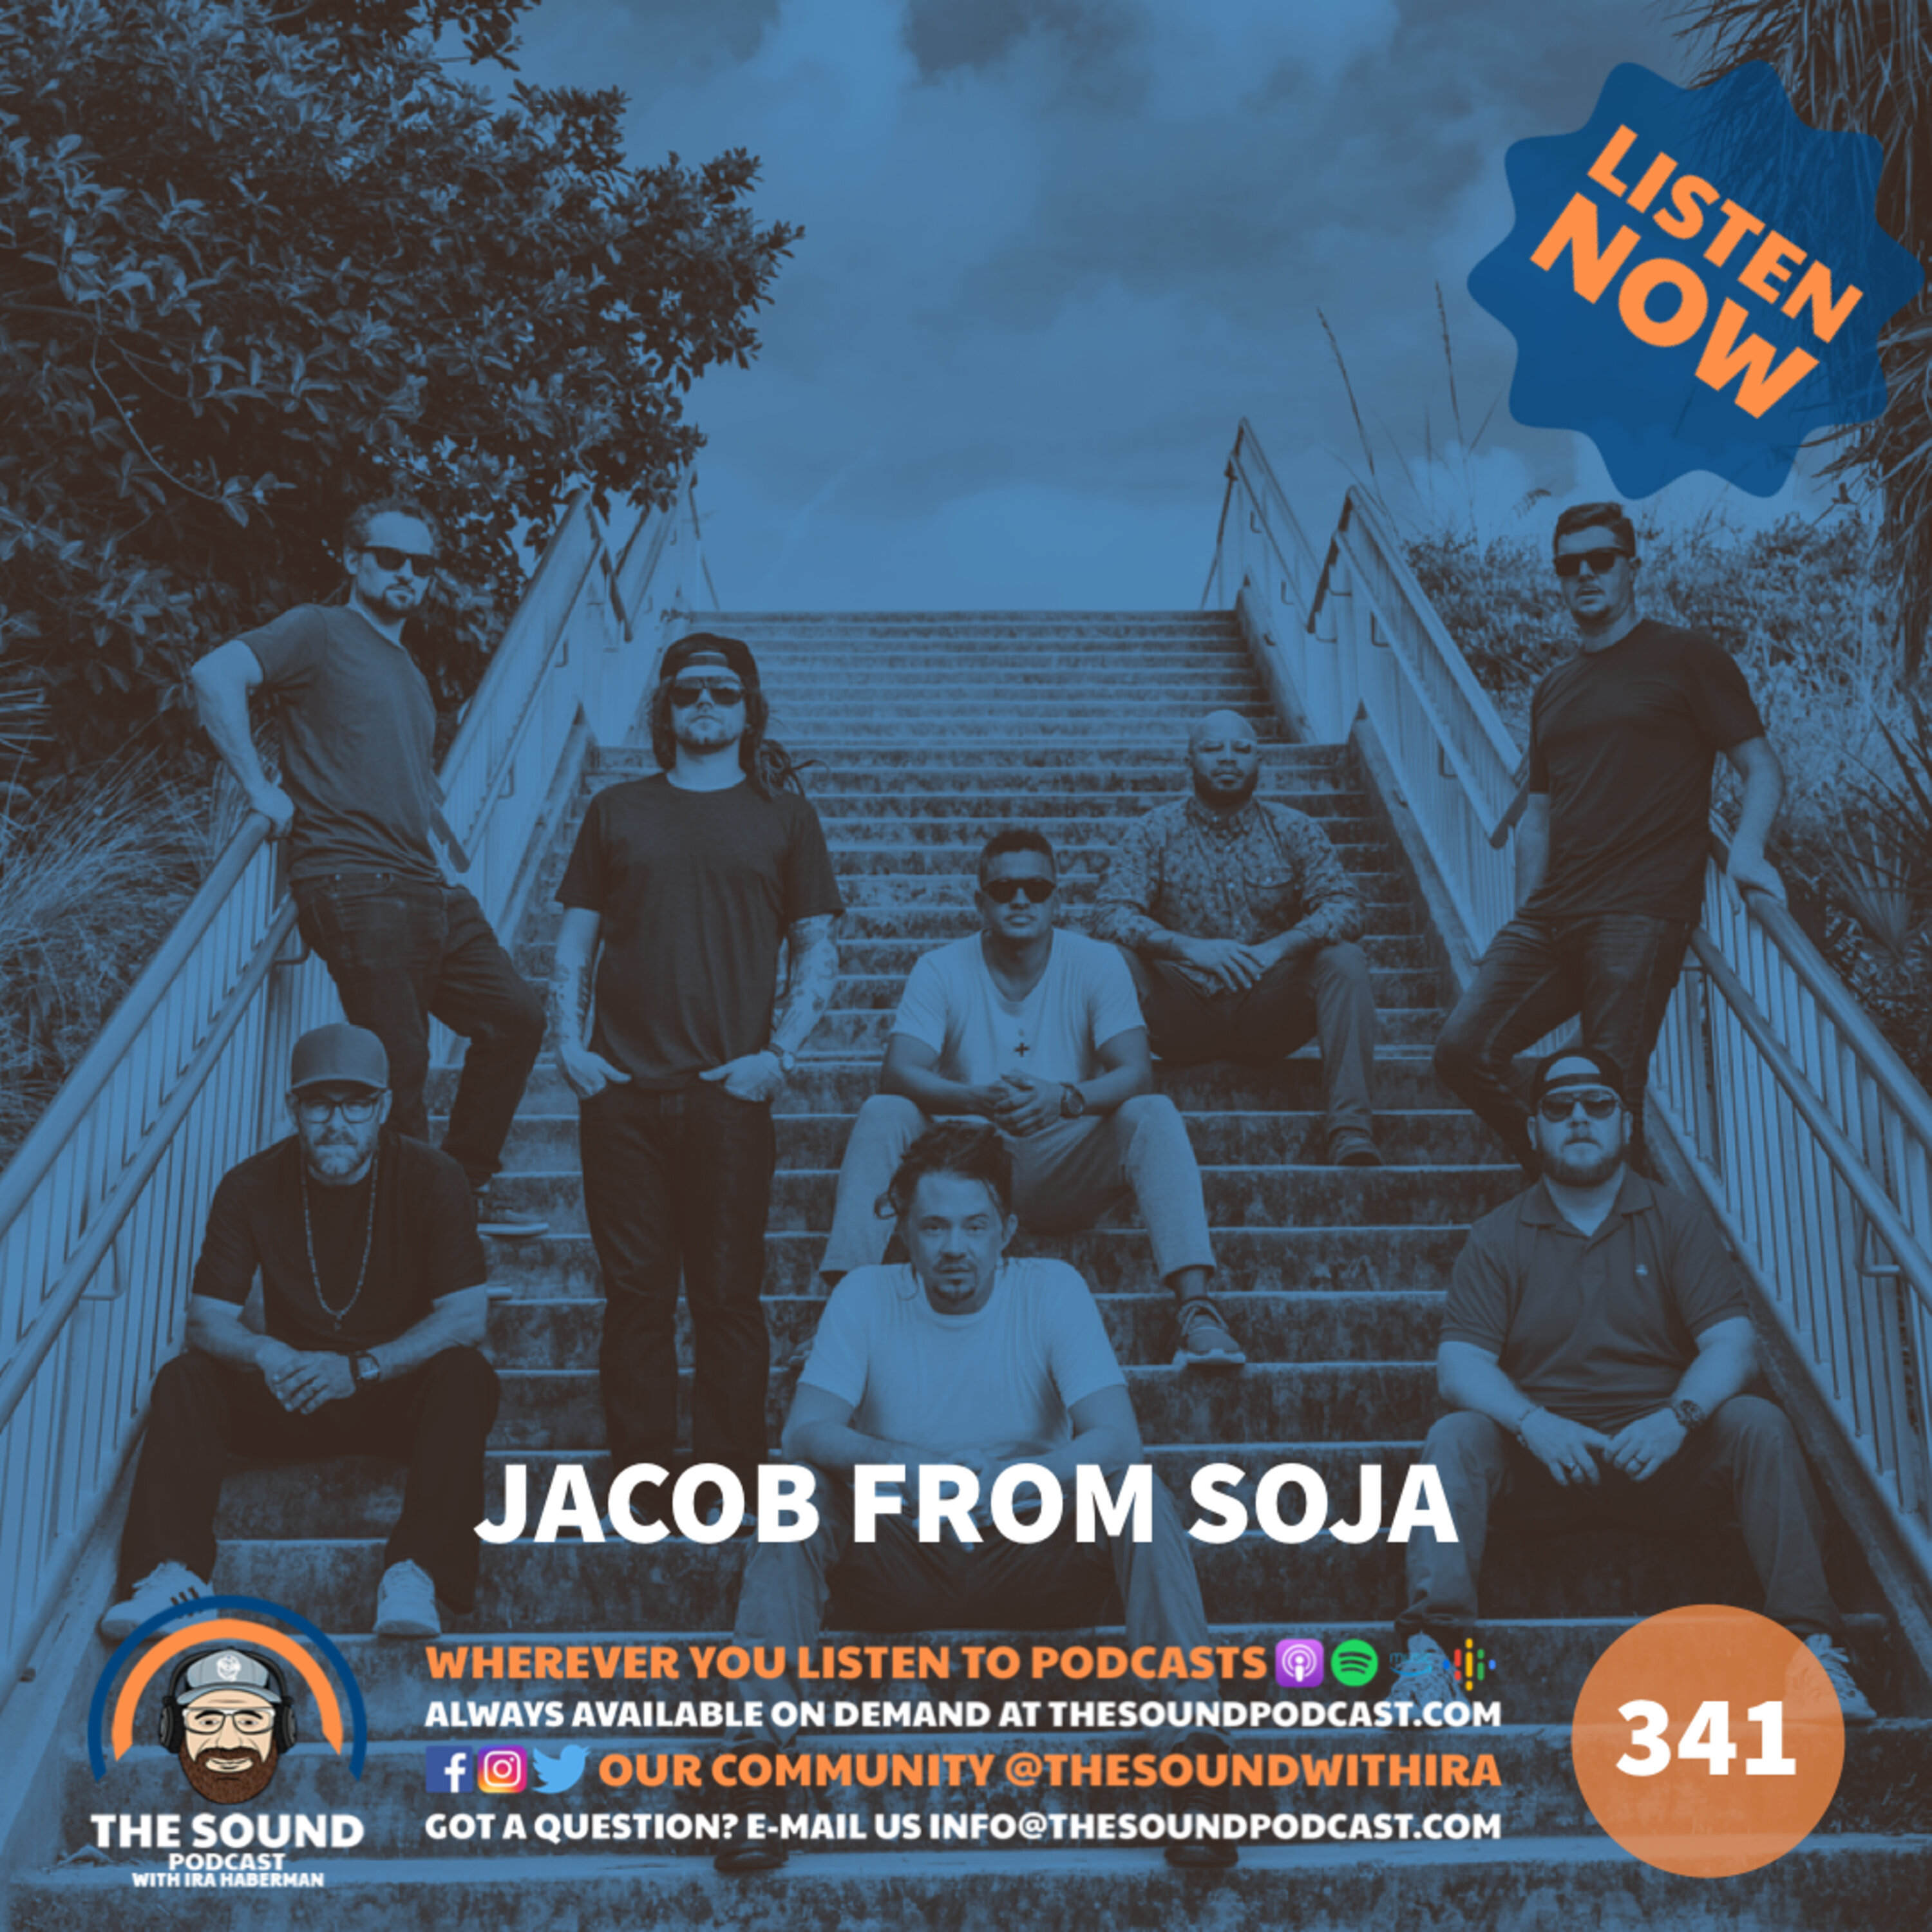 Jacob from SOJA Image